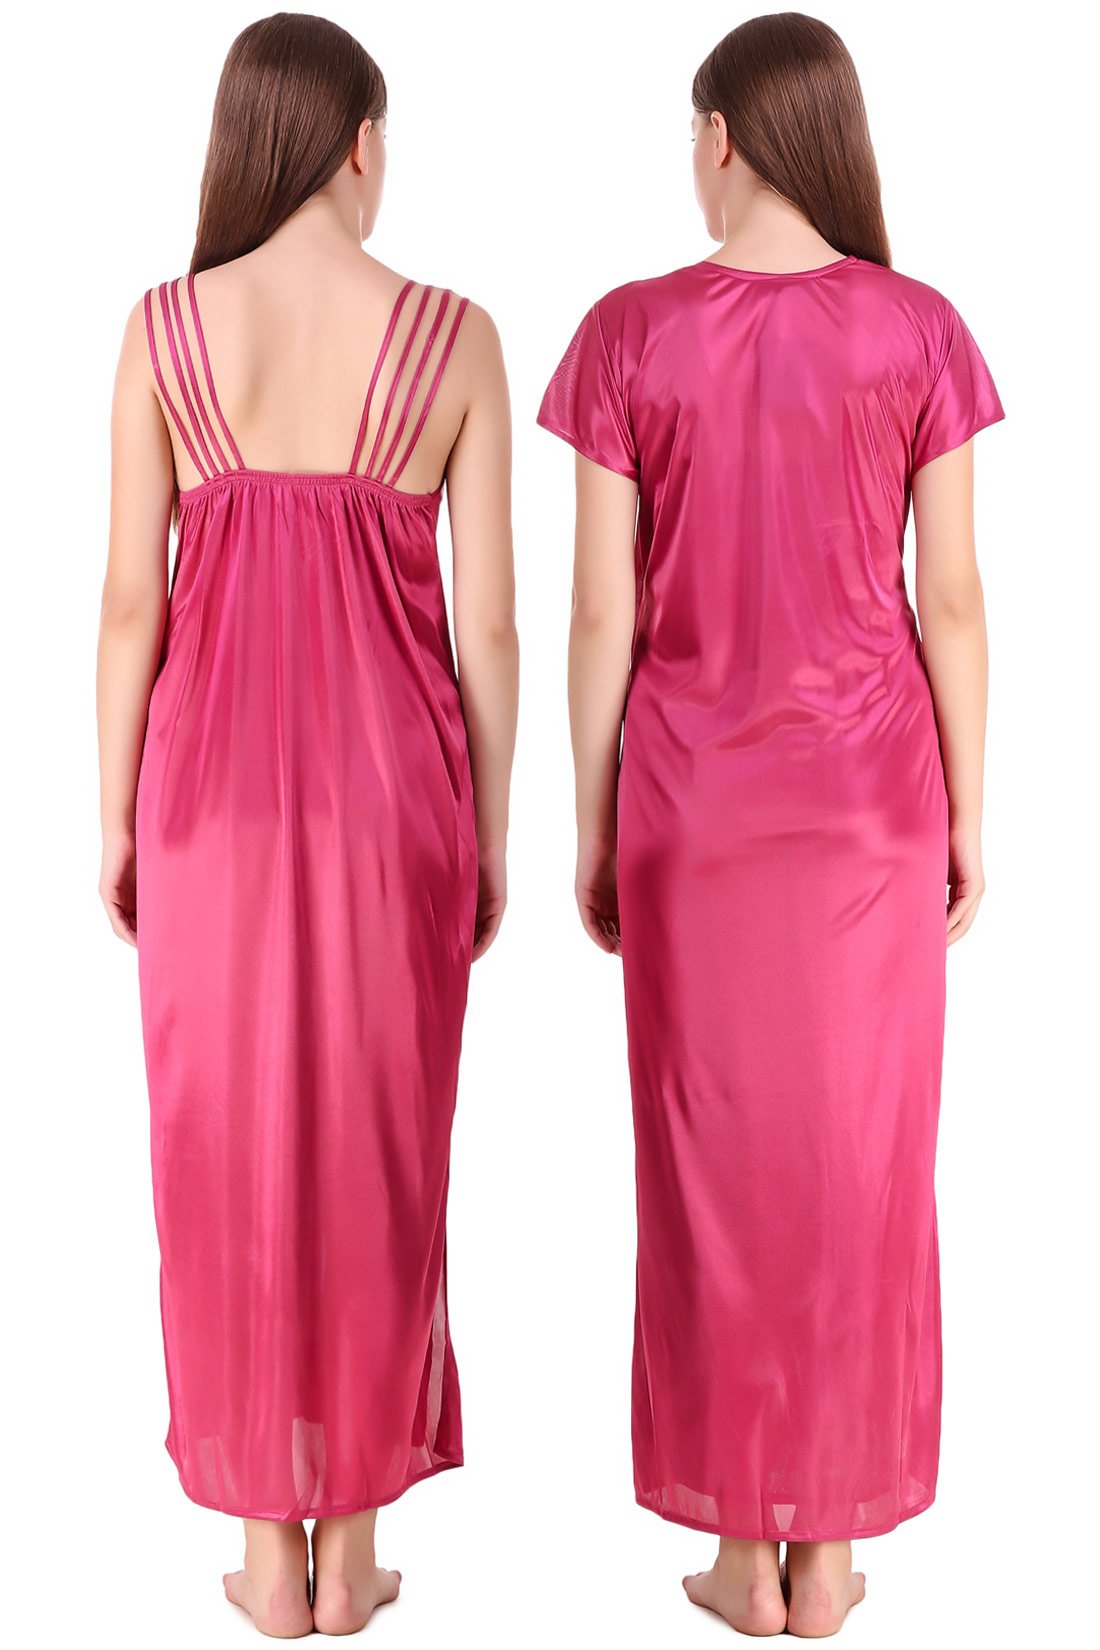 Chloe Satin Gown Nightwear Set The Orange Tags